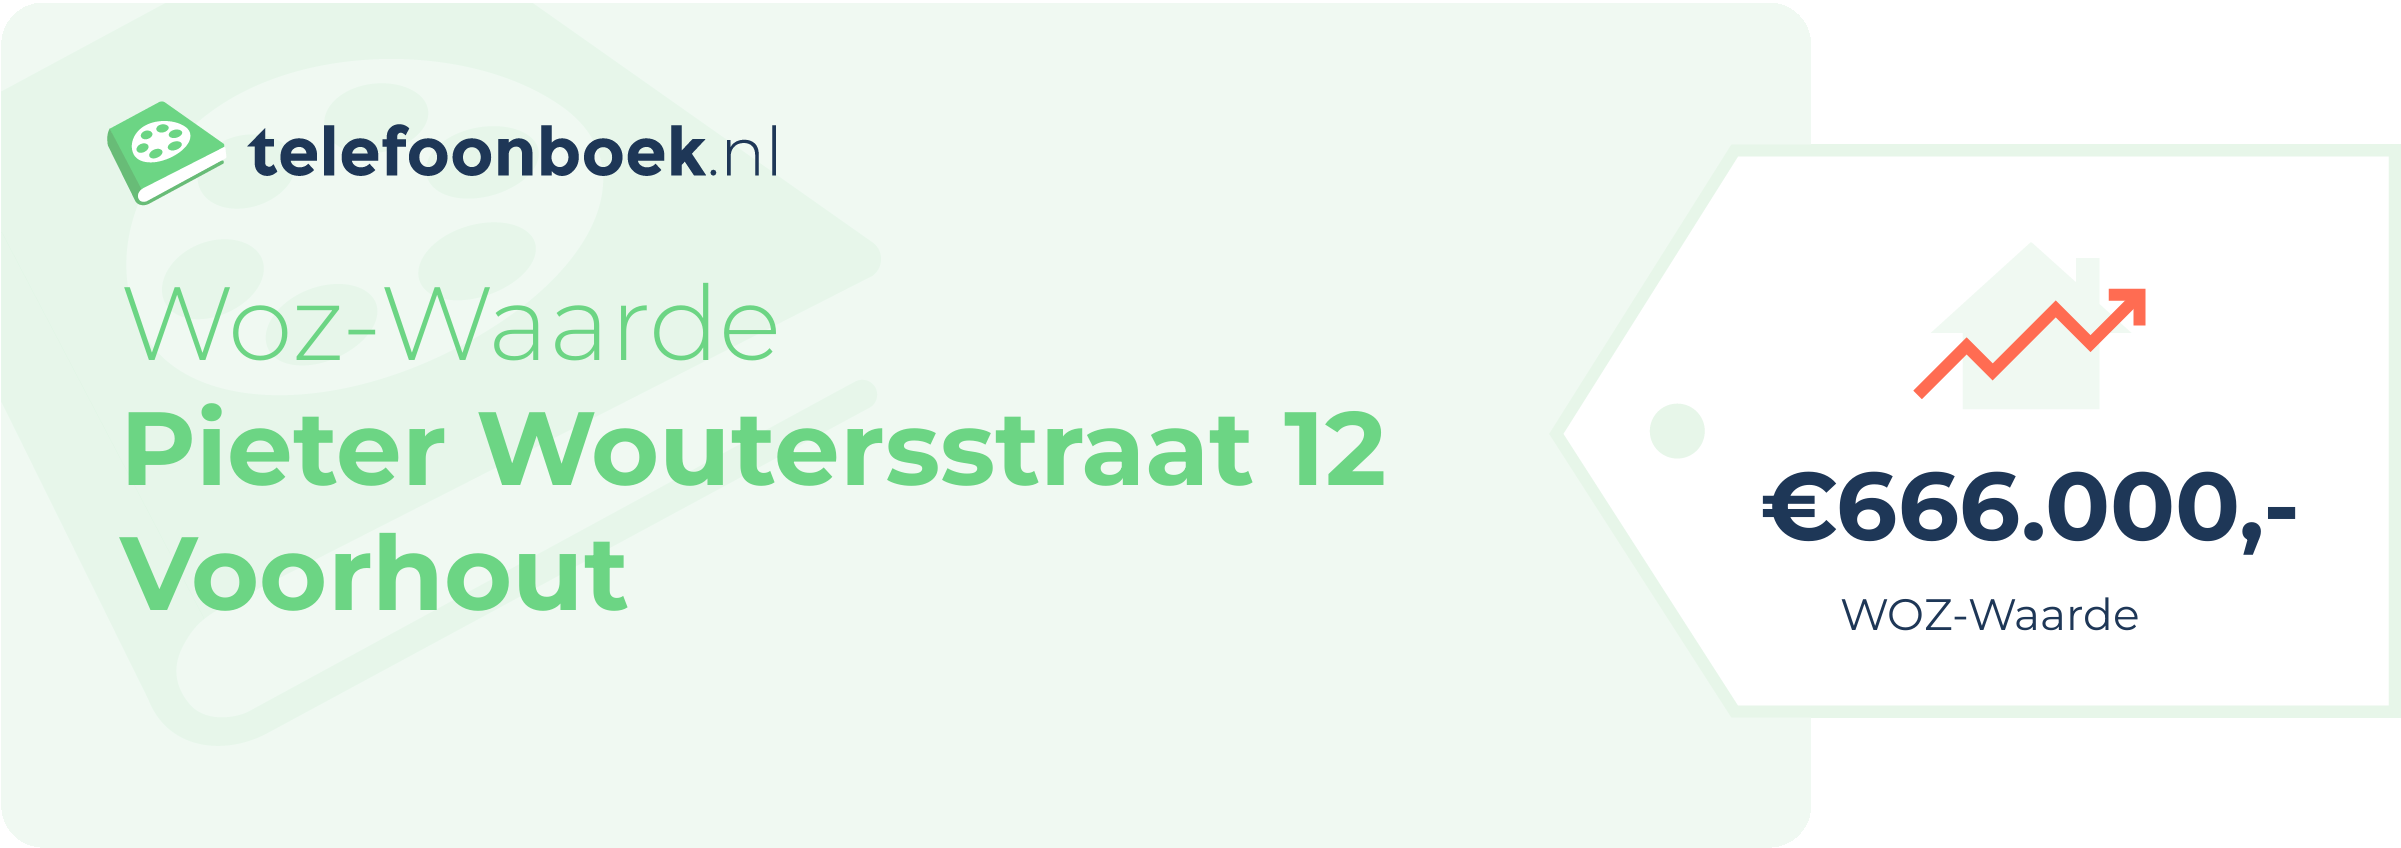 WOZ-waarde Pieter Woutersstraat 12 Voorhout